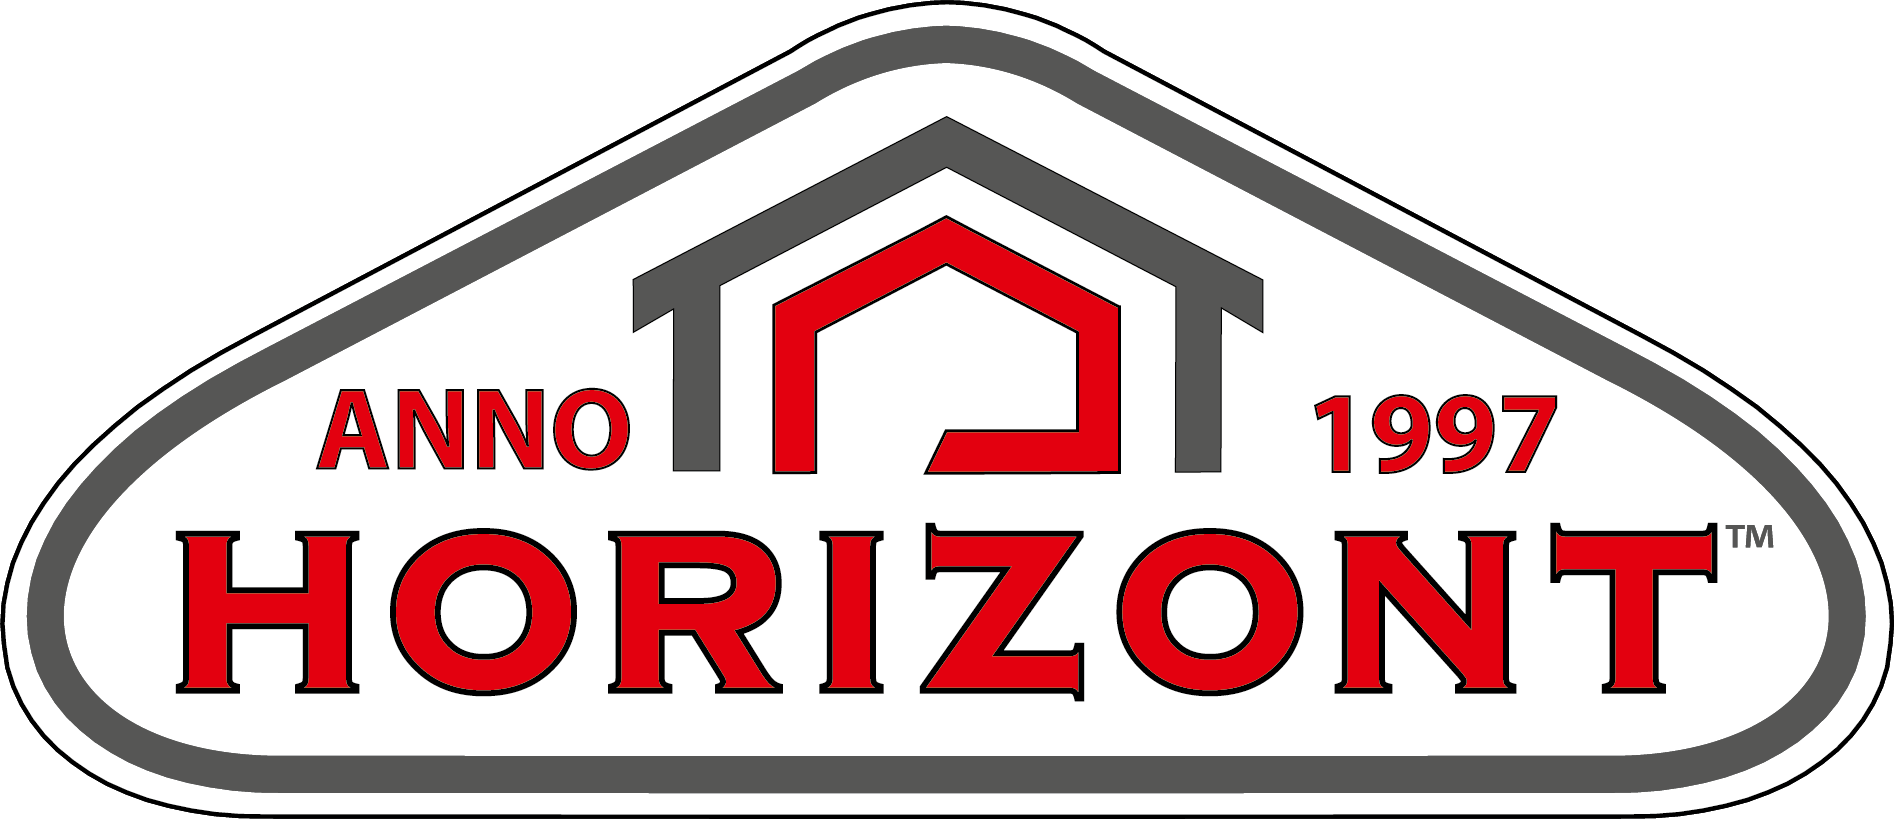 Horizont logo social mediahoz